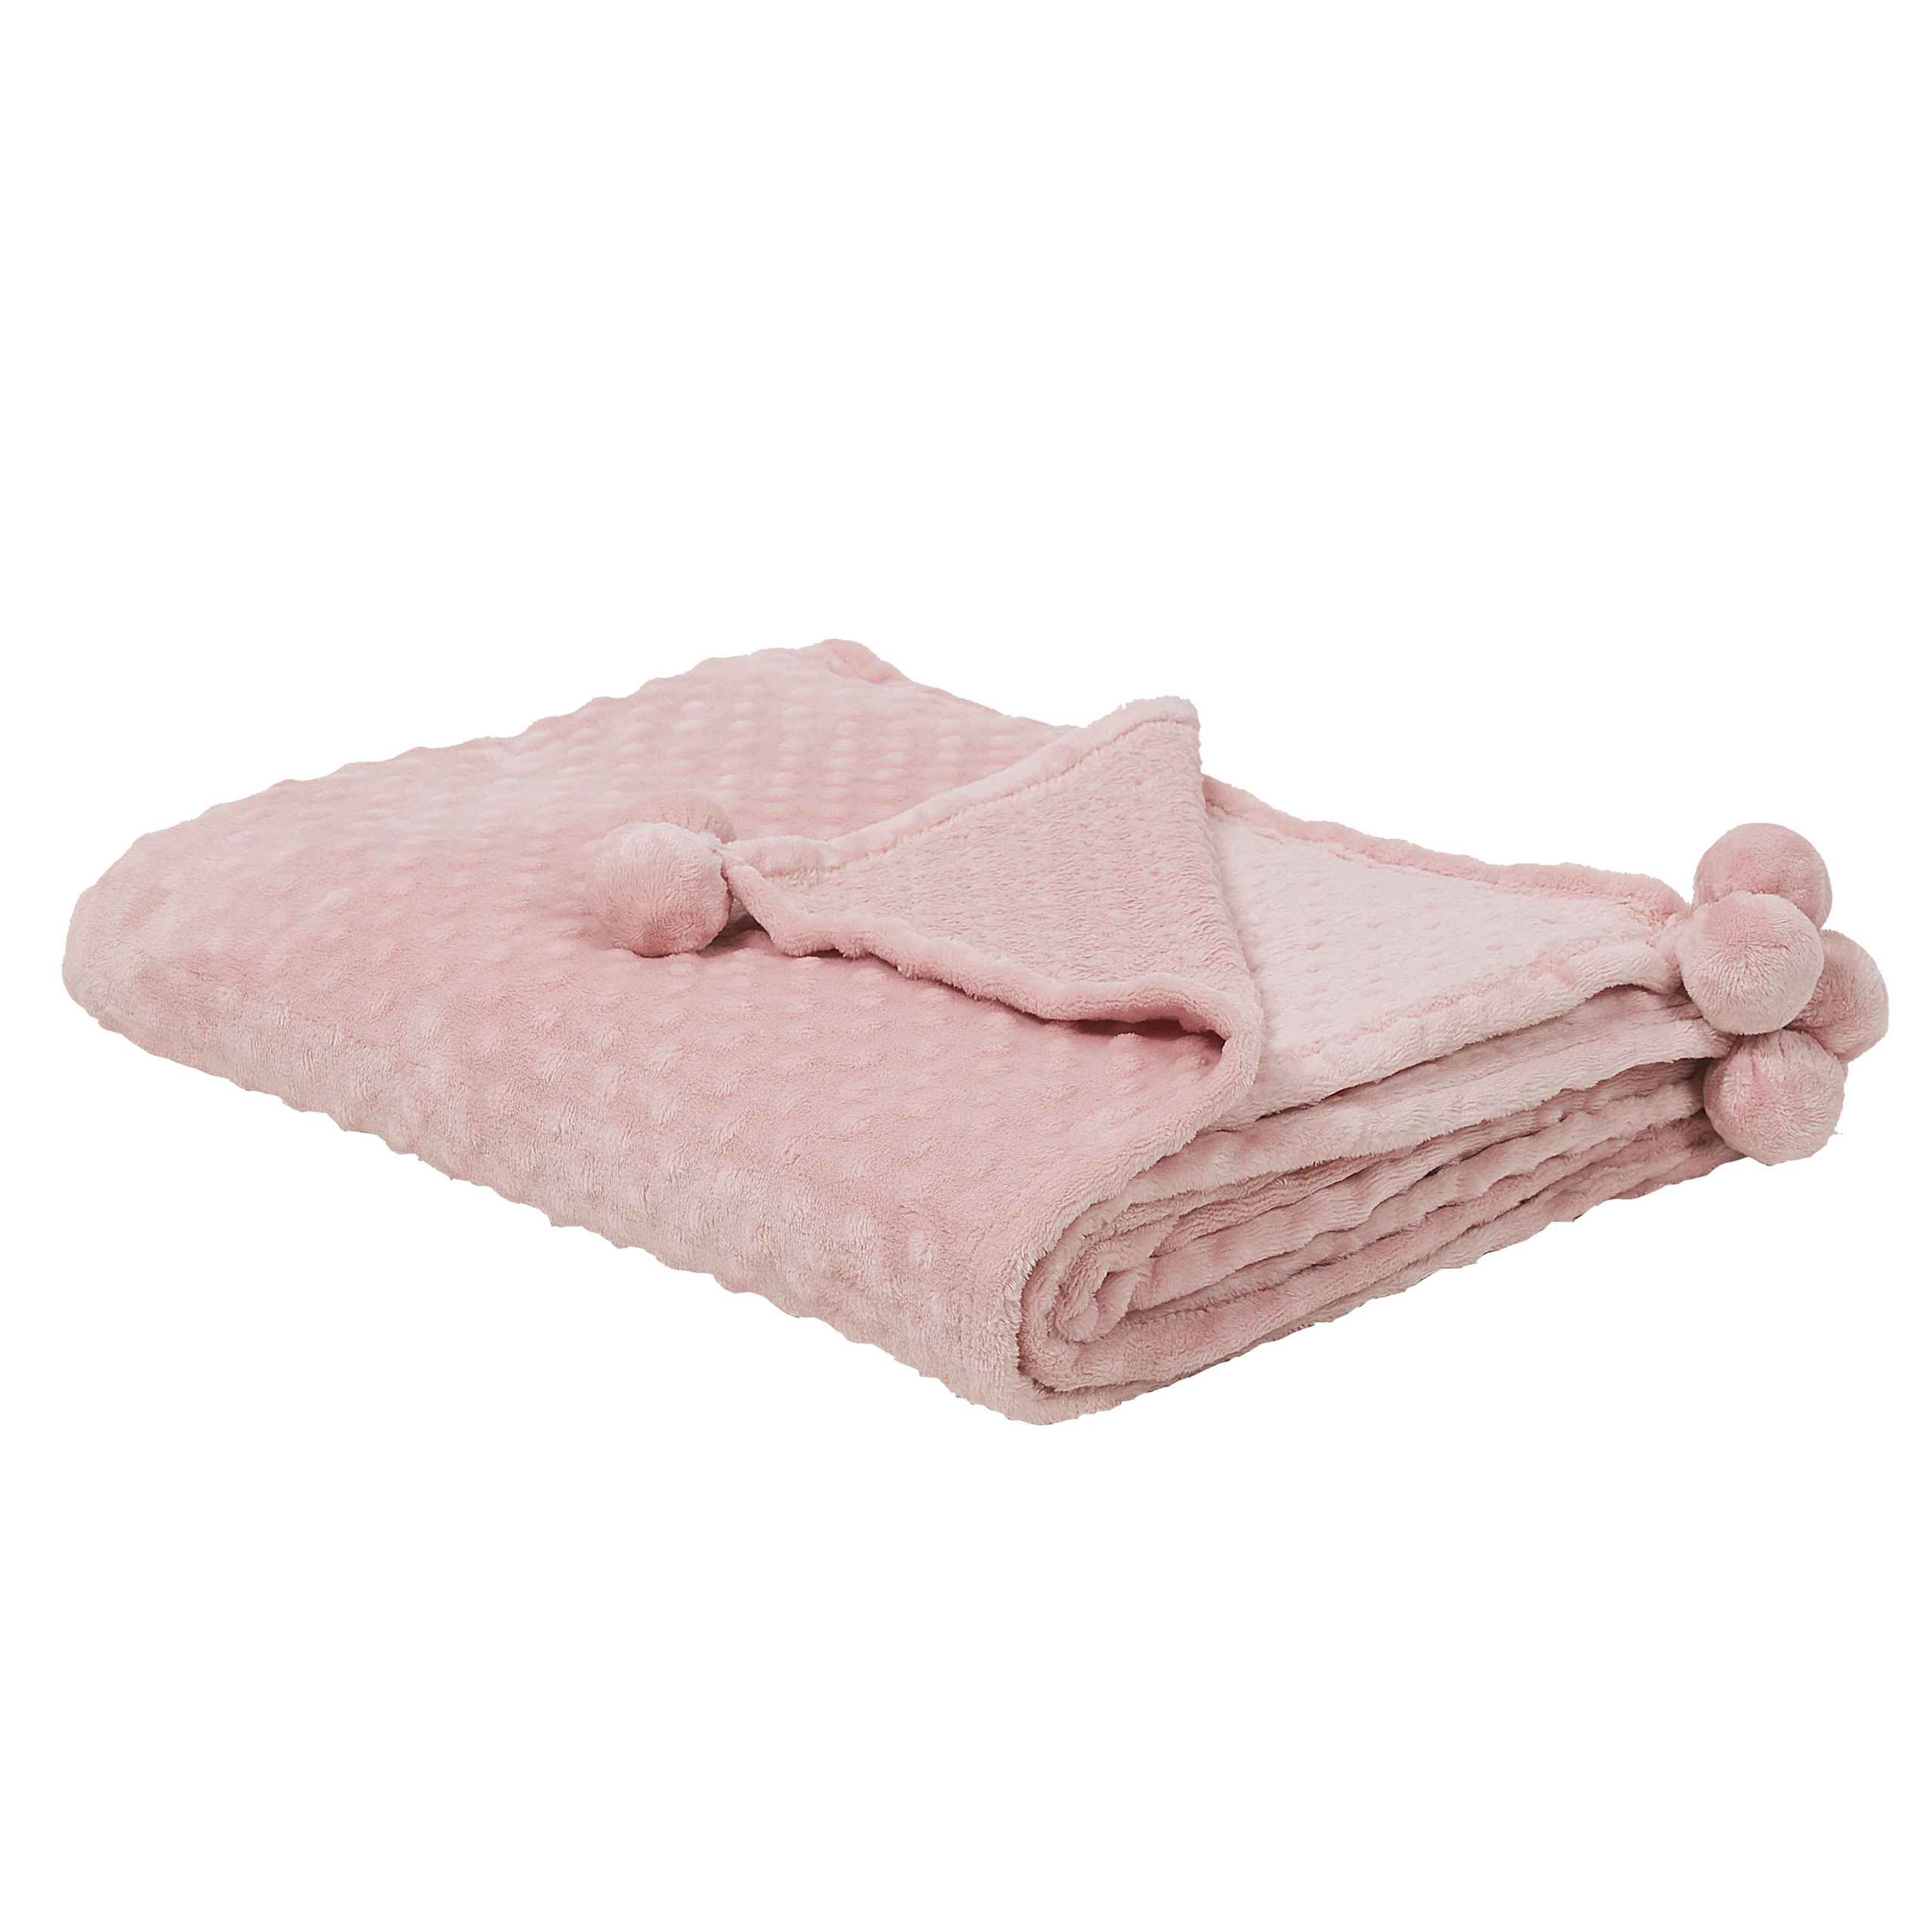 Beliani Blanket Pink Throw 150 x 200 with Pom Poms Popcorn Texture Soft Coverlet